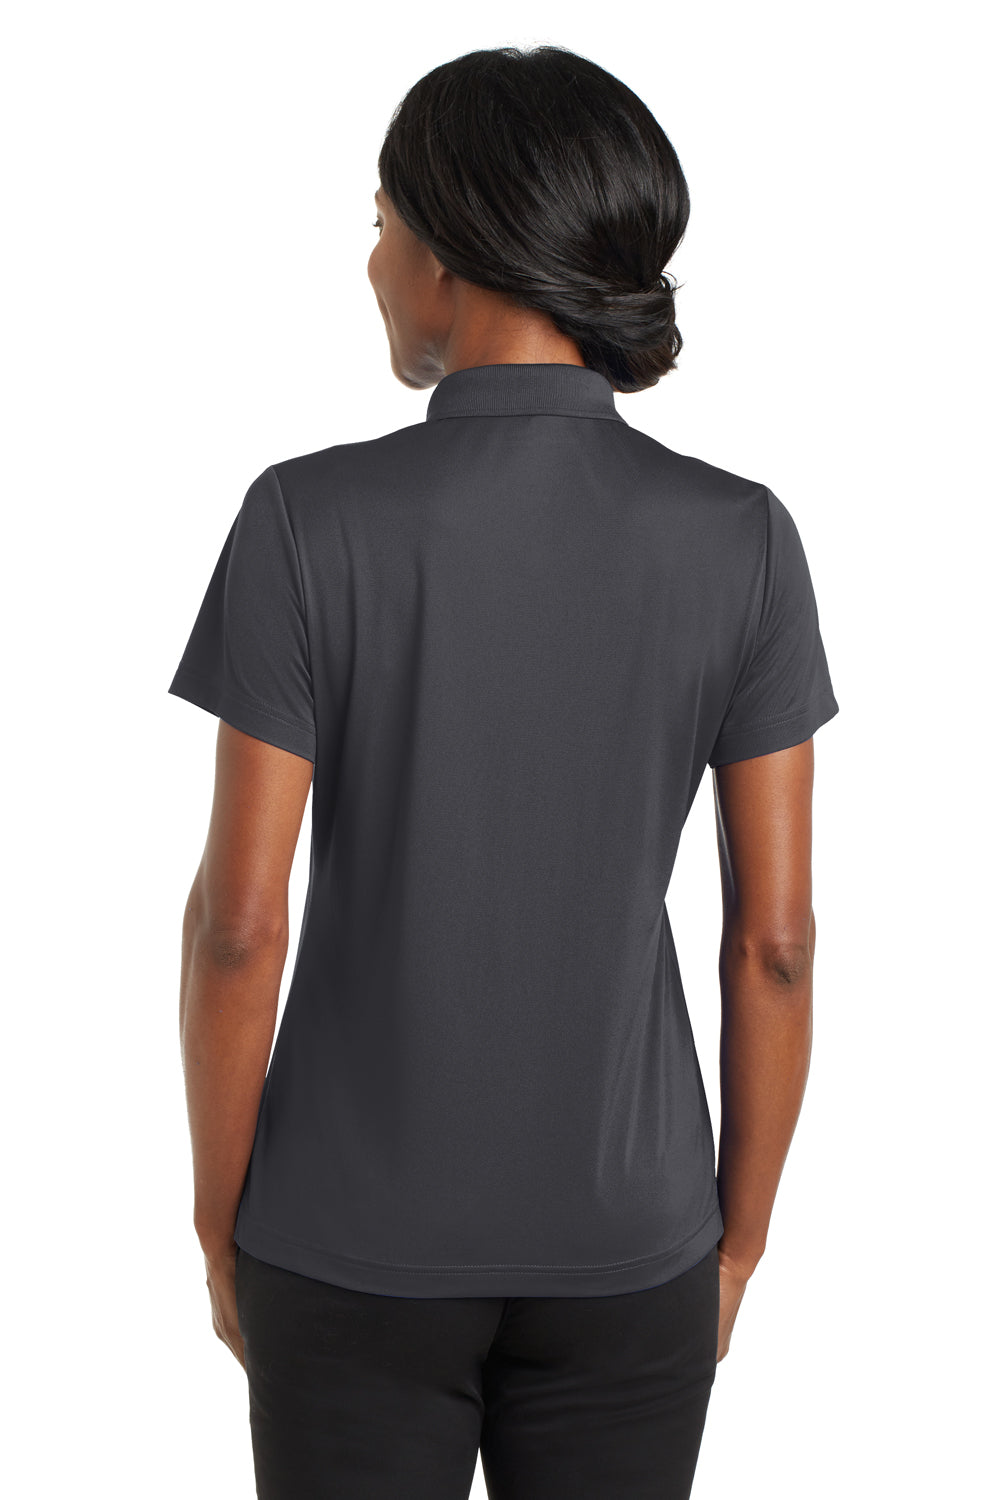 CornerStone CS422 Womens Gripper Moisture Wicking Short Sleeve Polo Shirt Iron Grey Back